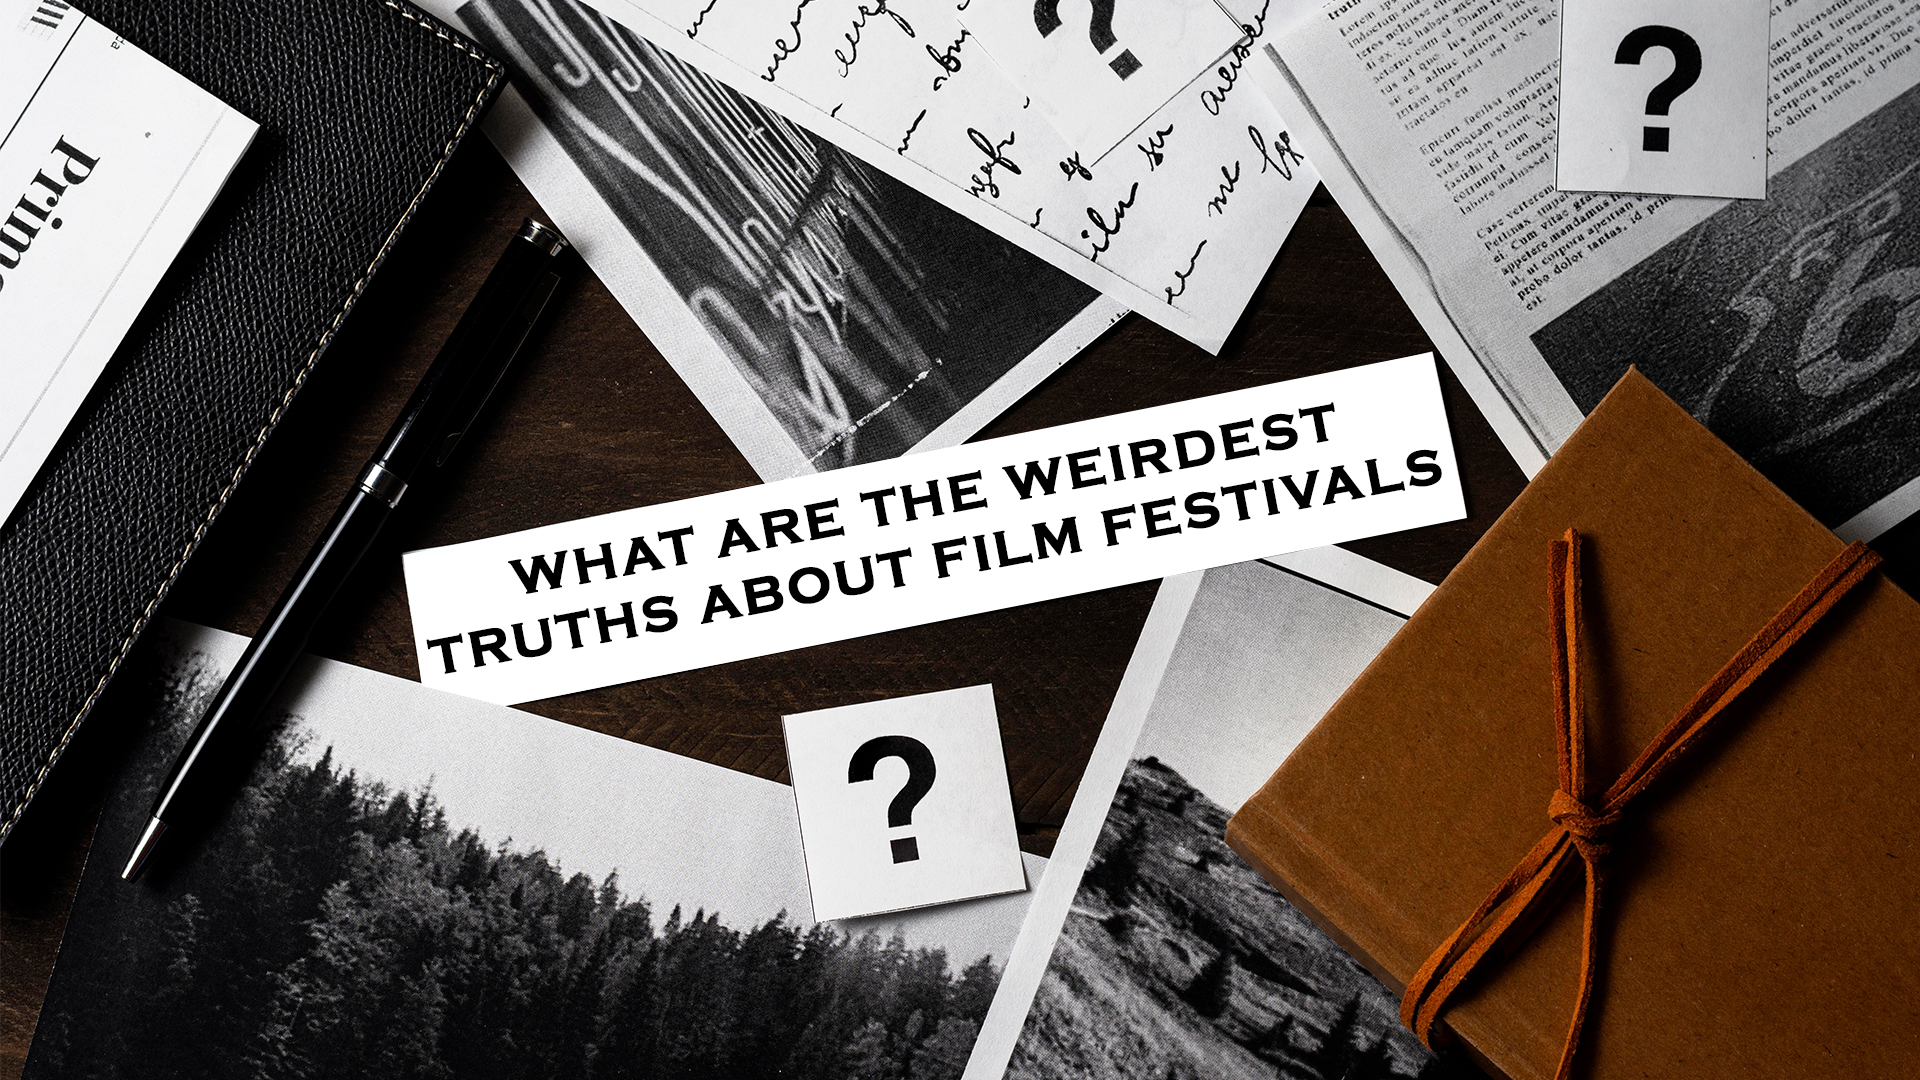 Some weirdest truths about Film Festivals